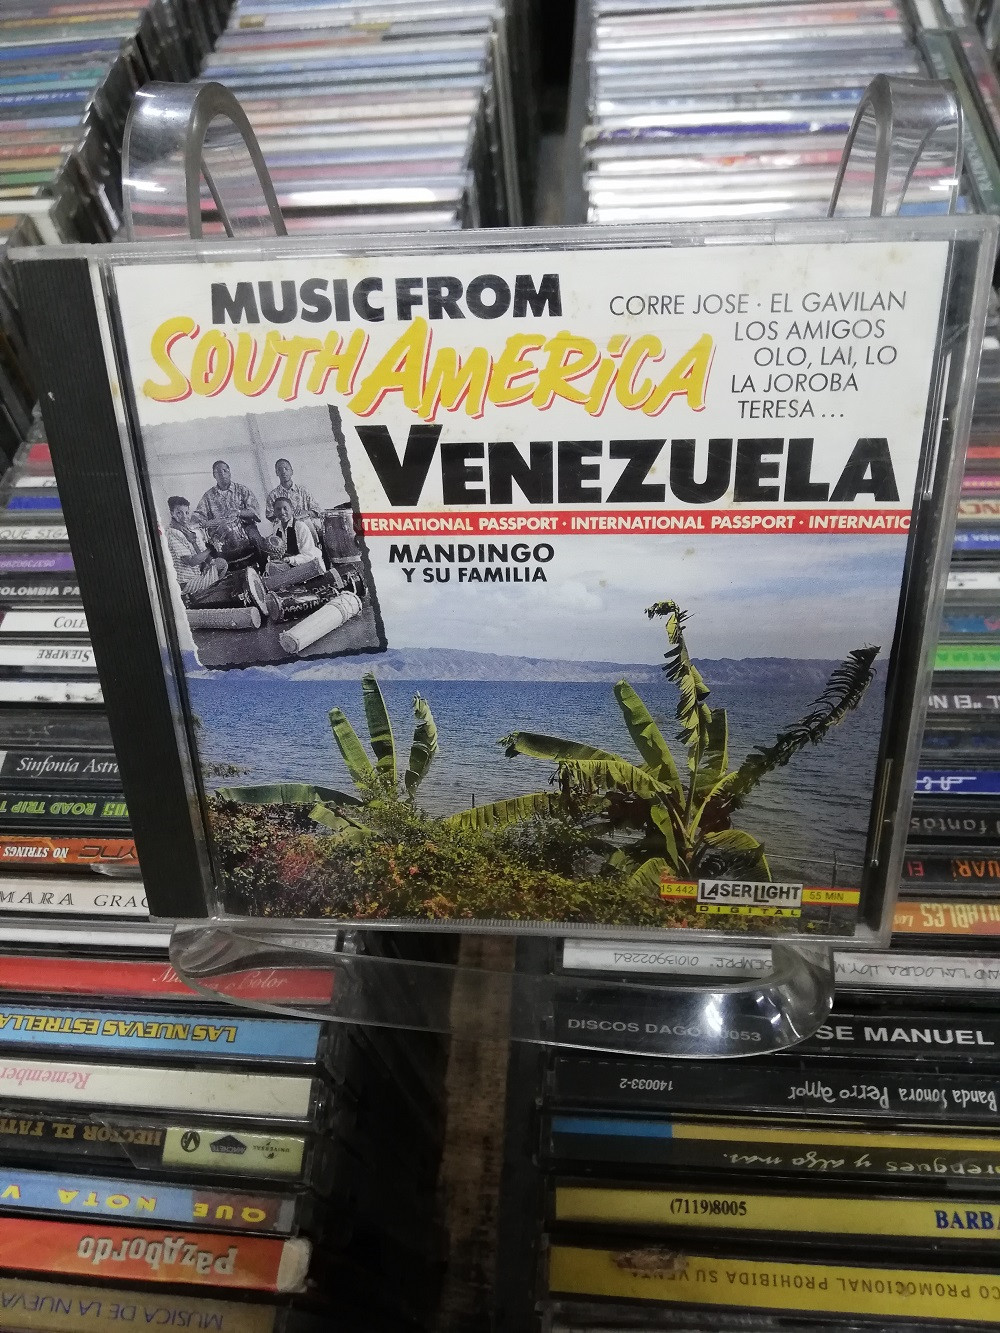 Imagen CD MUSIC FROM SOUTH AMERICA - VENEZUELA